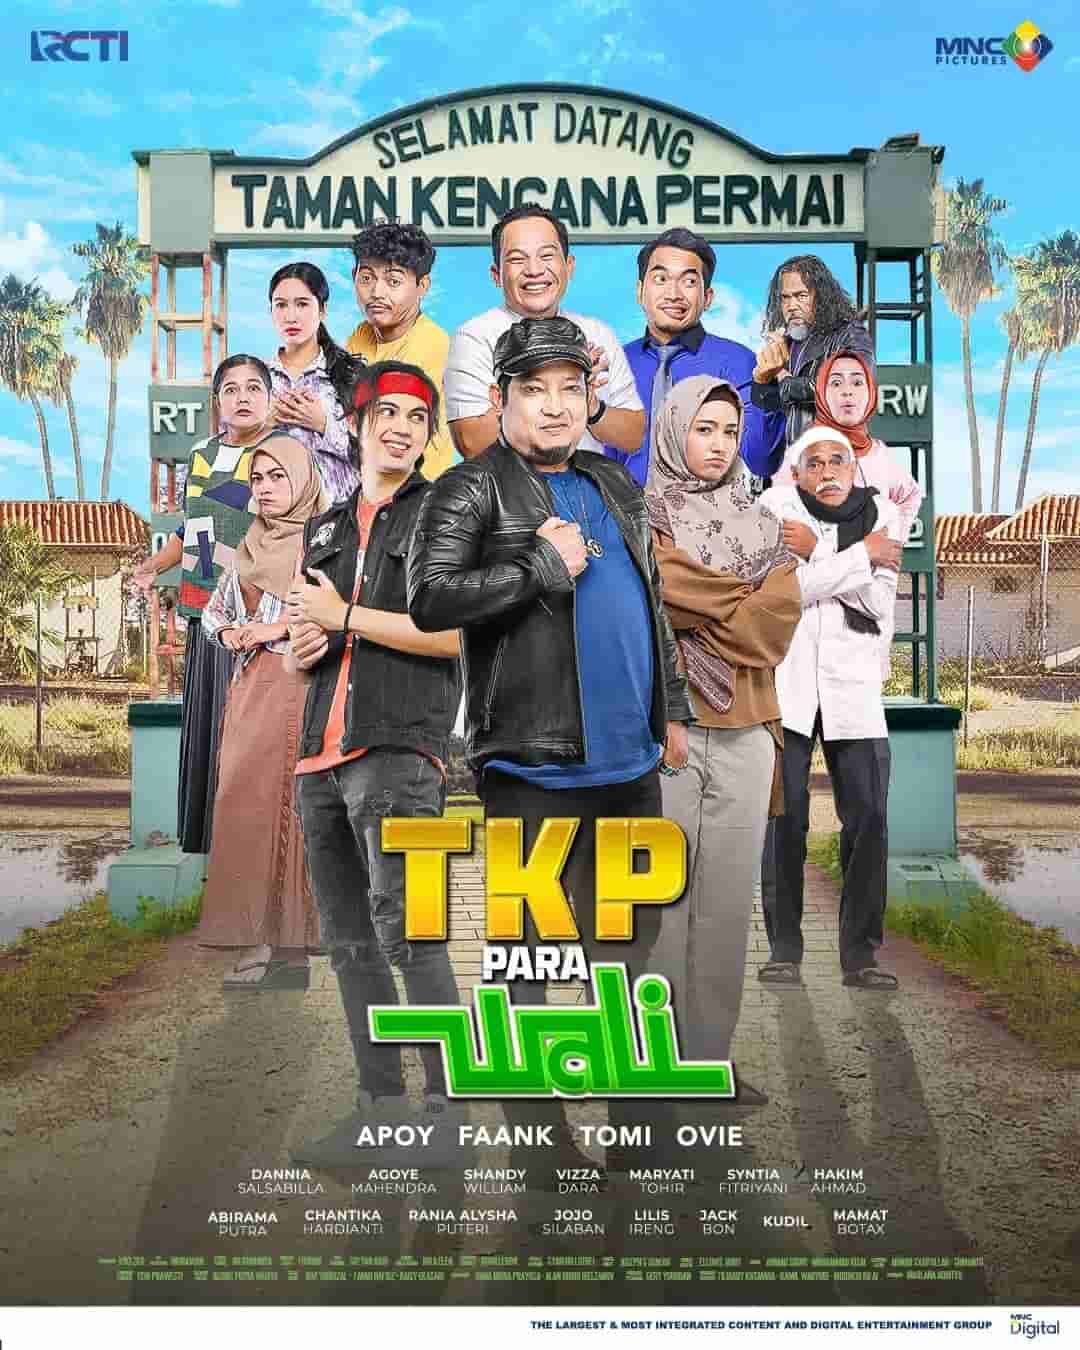 TKP: Para Wali - Sinopsis, Pemain, OST, Episode, Review